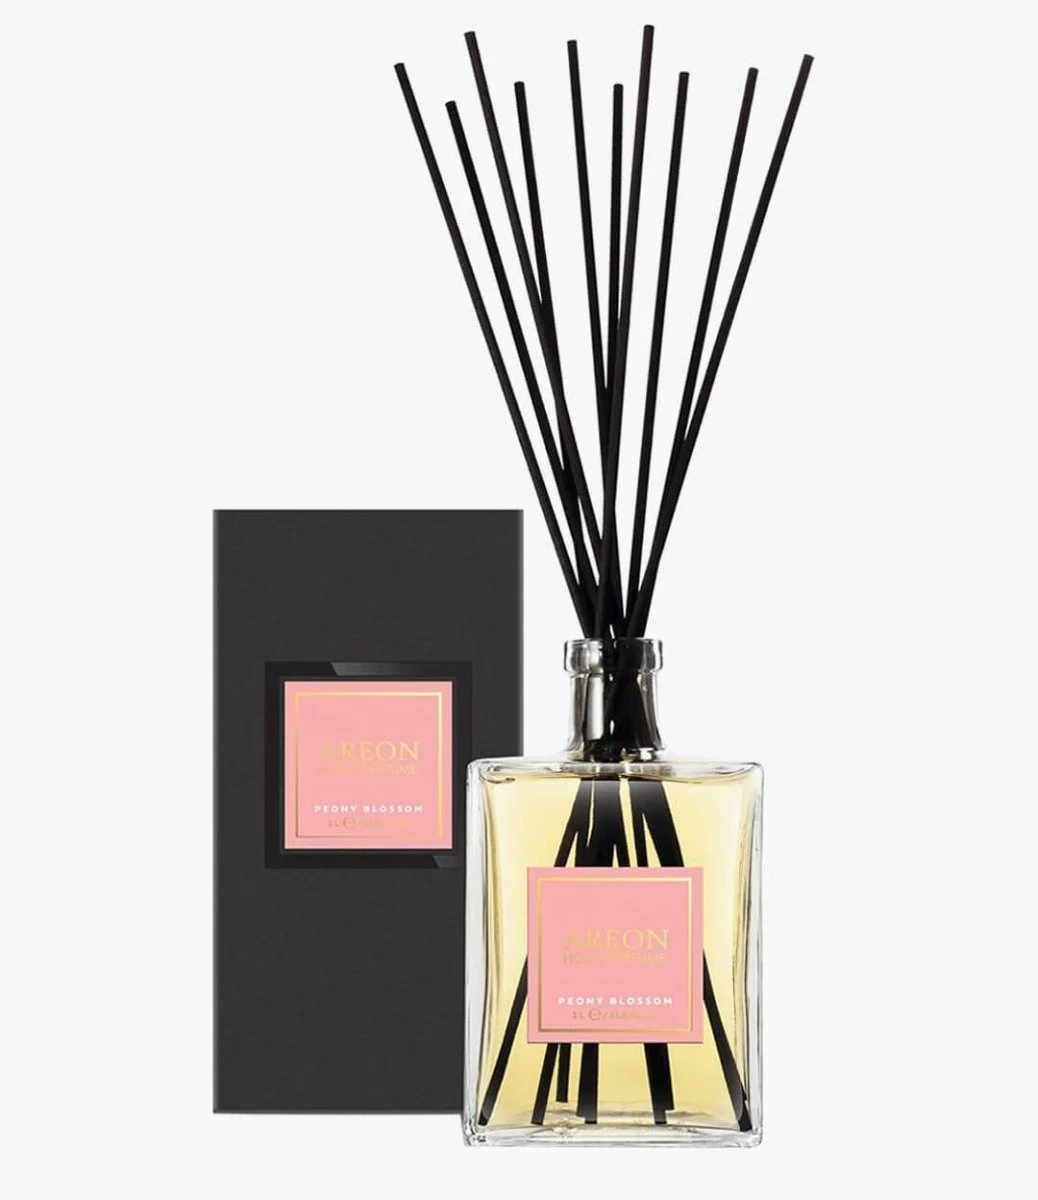 Areon Home Perfumes 1 litter Premium Peony Blossom